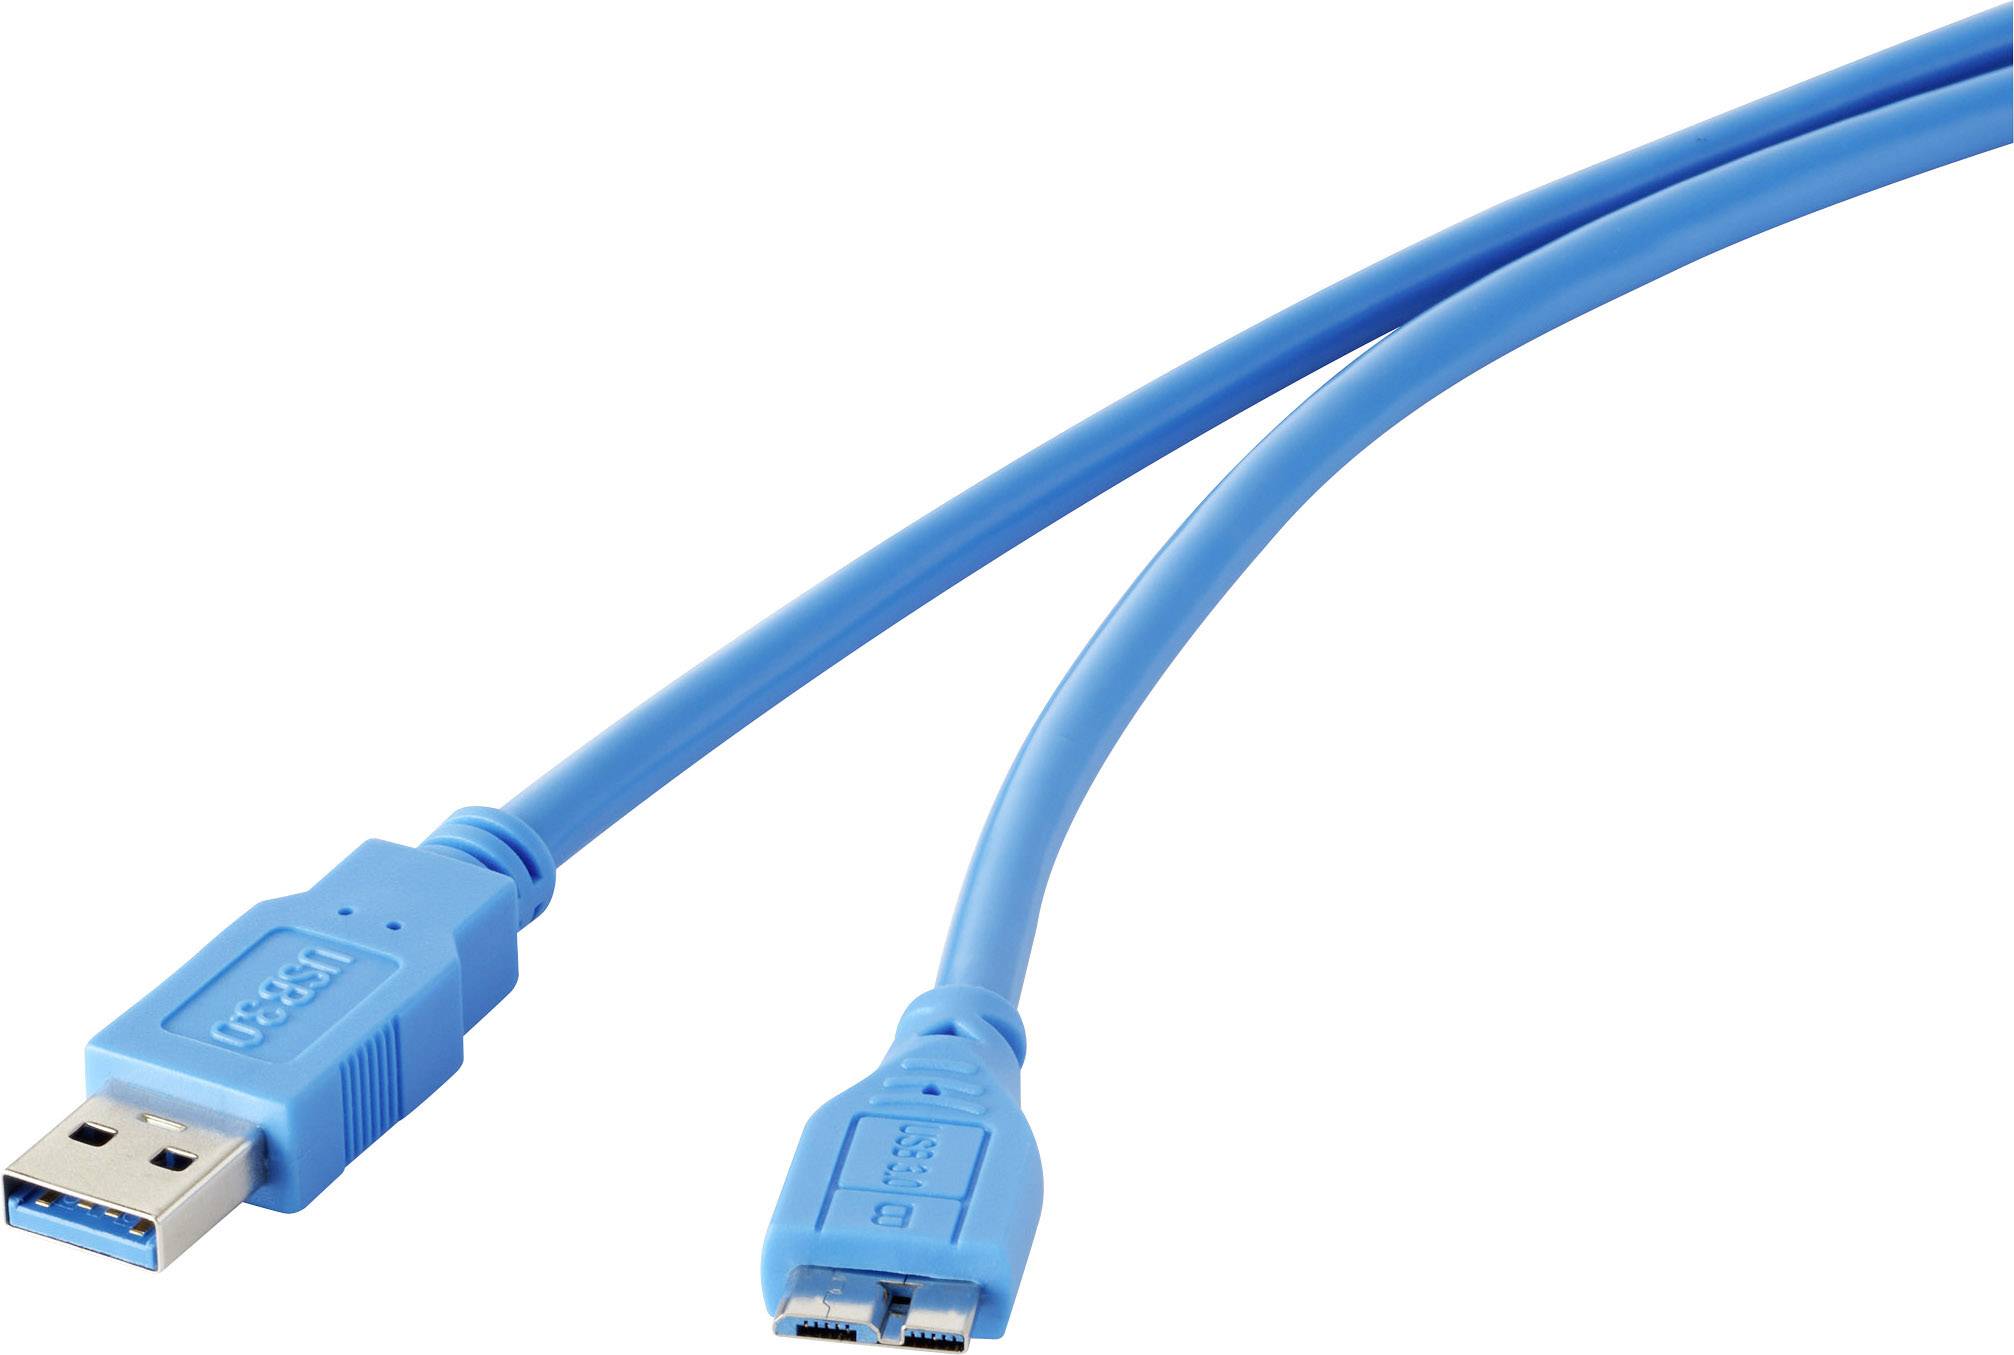 CONRAD USB 3.0 Kabel [1x USB 3.0 Stecker A - 1x USB 3.0 Stecker Micro B] 1.8 m Blau vergoldete Steck